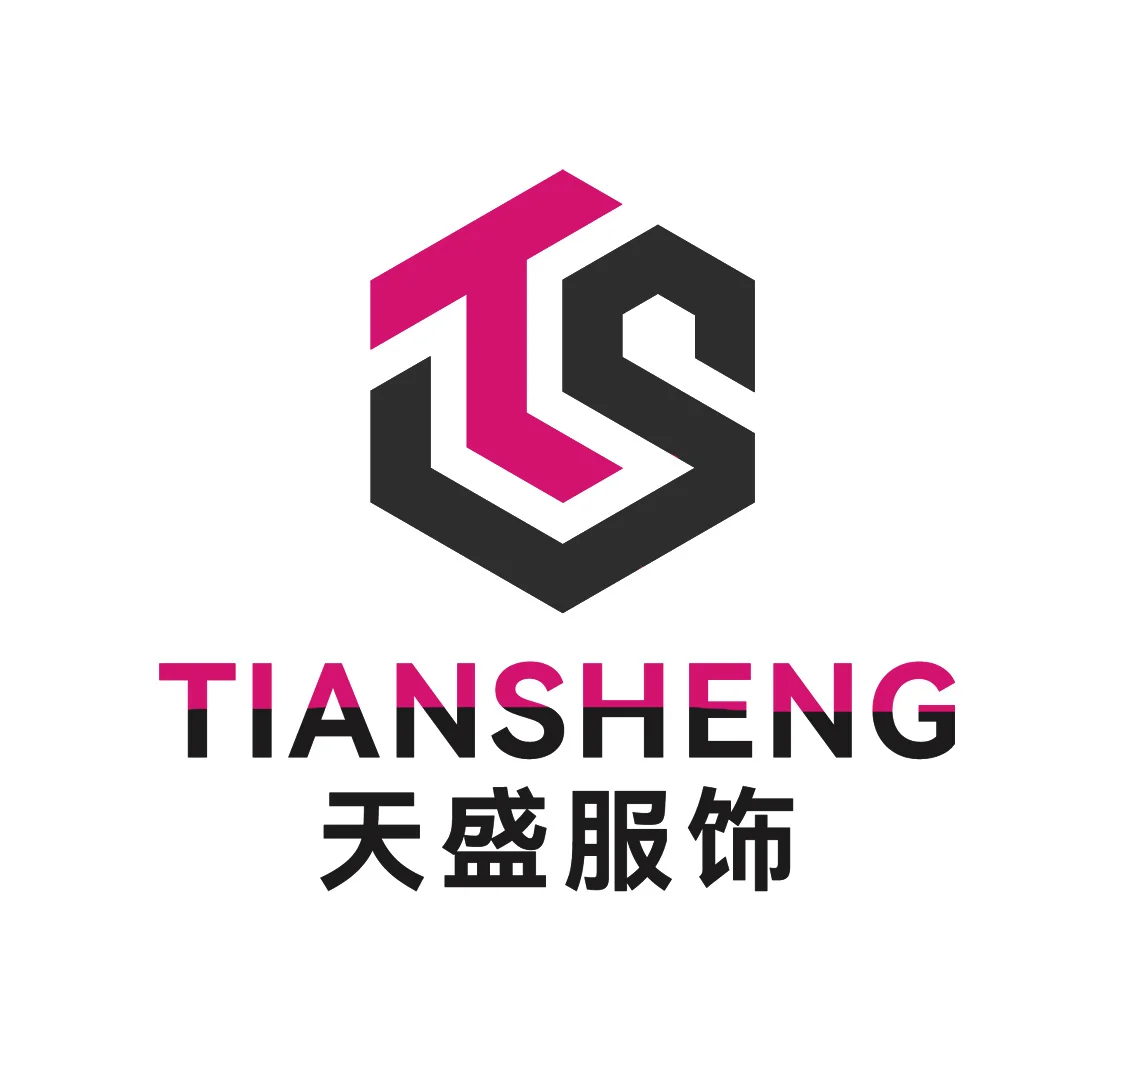 Company Overview - Dongguan Tiansheng Garment Co., Ltd.